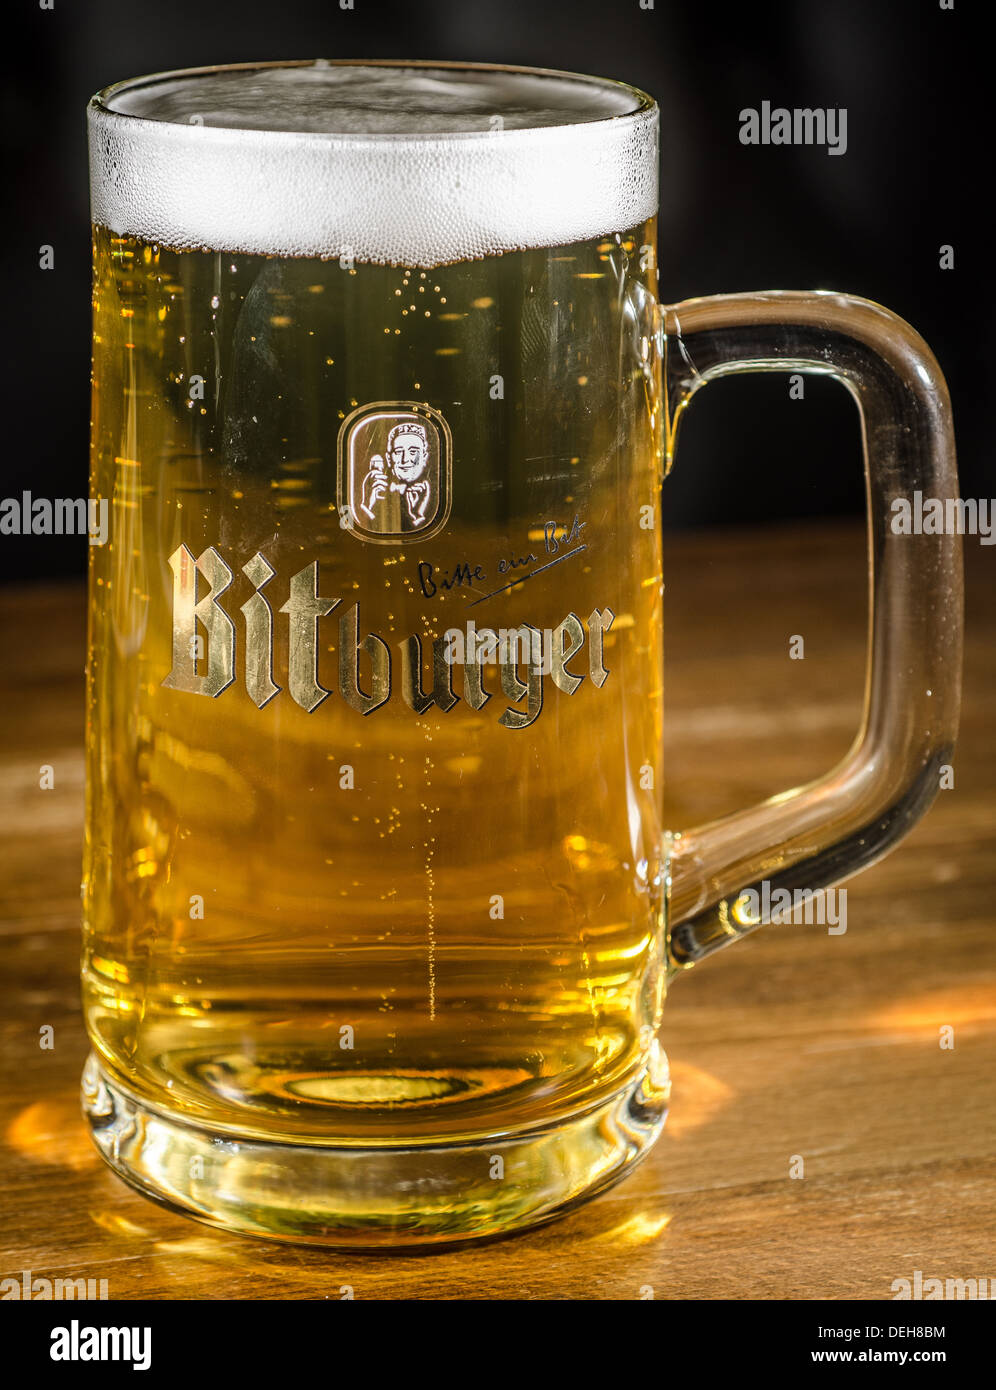 https://c8.alamy.com/comp/DEH8BM/pint-of-german-beer-DEH8BM.jpg